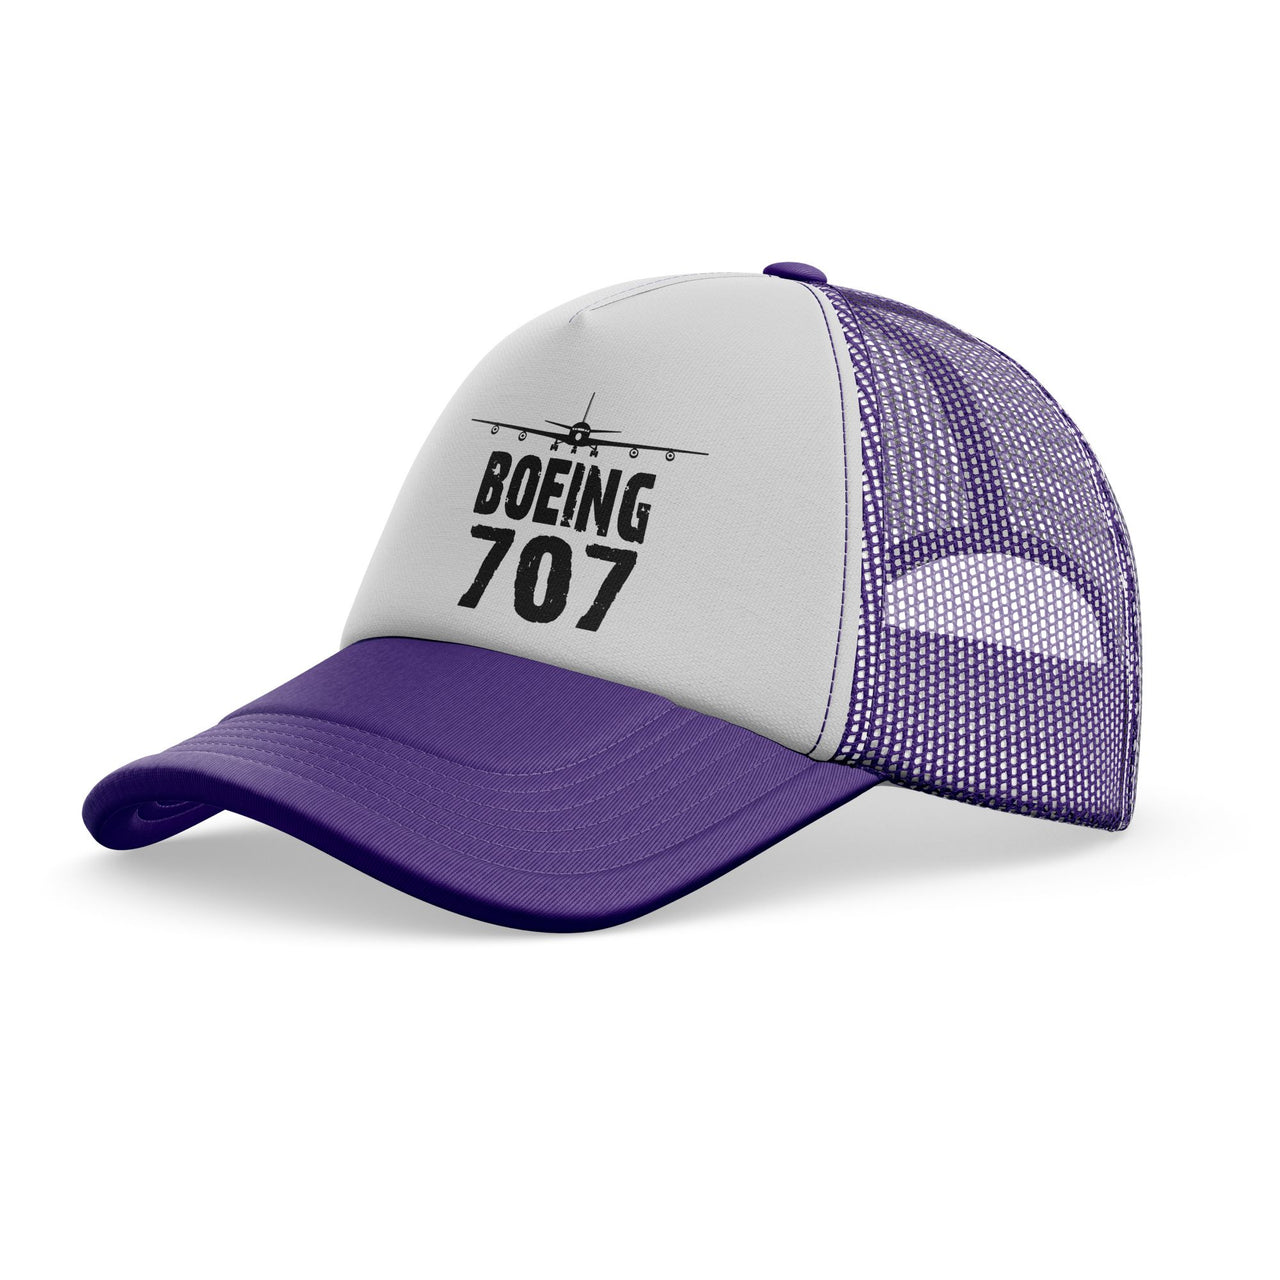 Boeing 707 & Plane Designed Trucker Caps & Hats